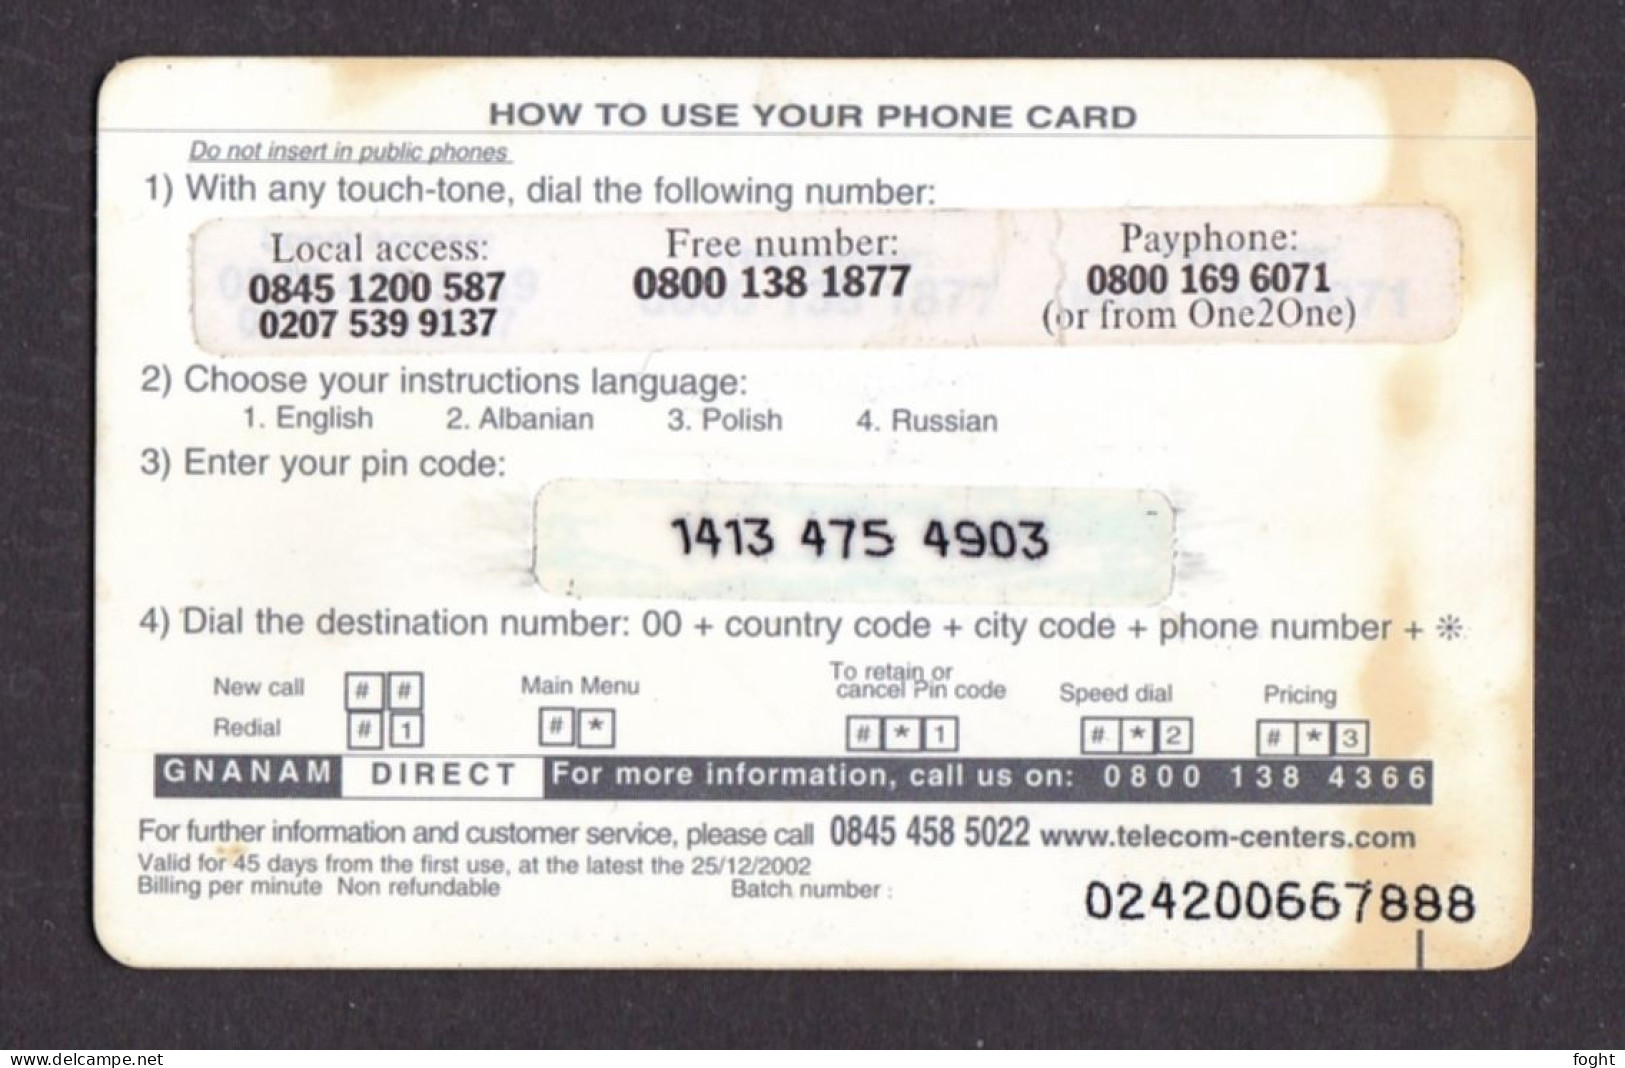 2002 United Kingdom, Phonecard ›Eastern Call2,5£,Col:GB-PRE-GNG-0022B - Emissions Entreprises